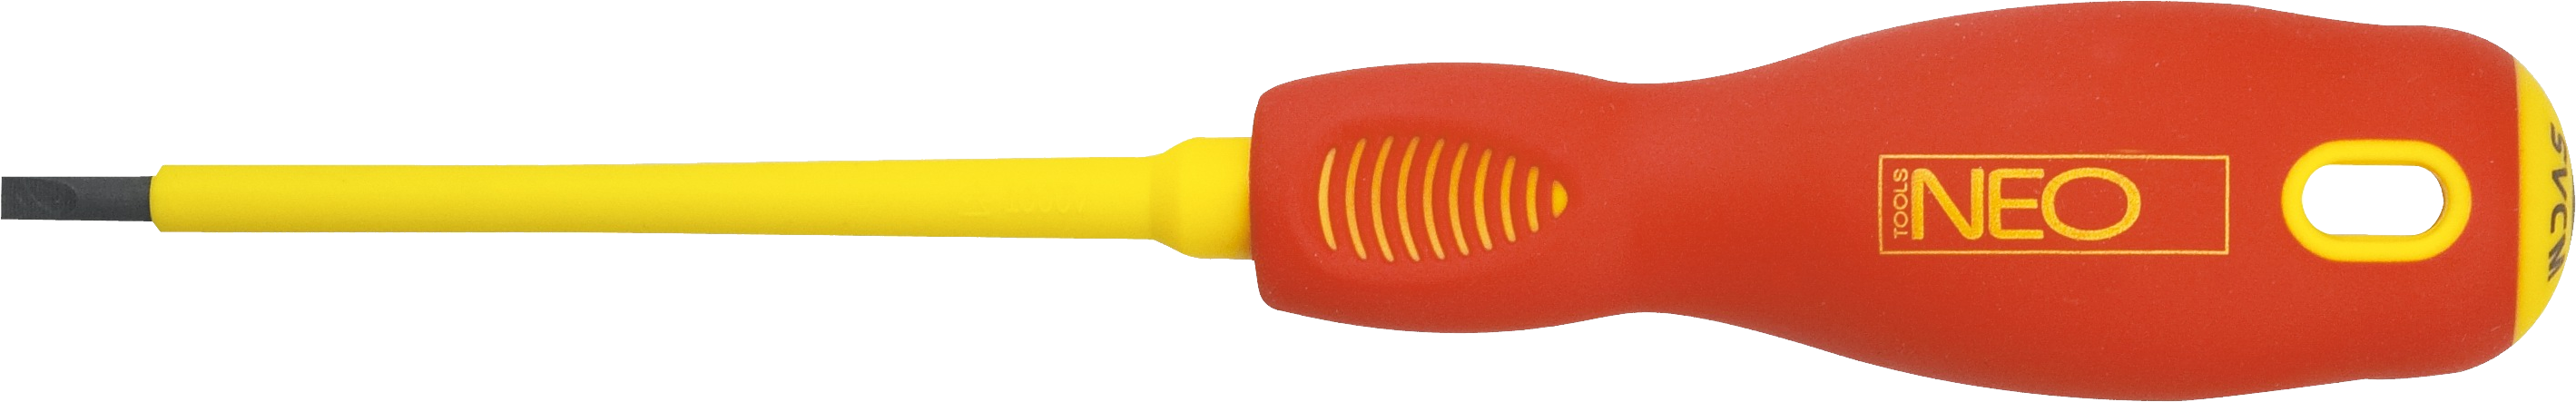 screwdriver clipart red